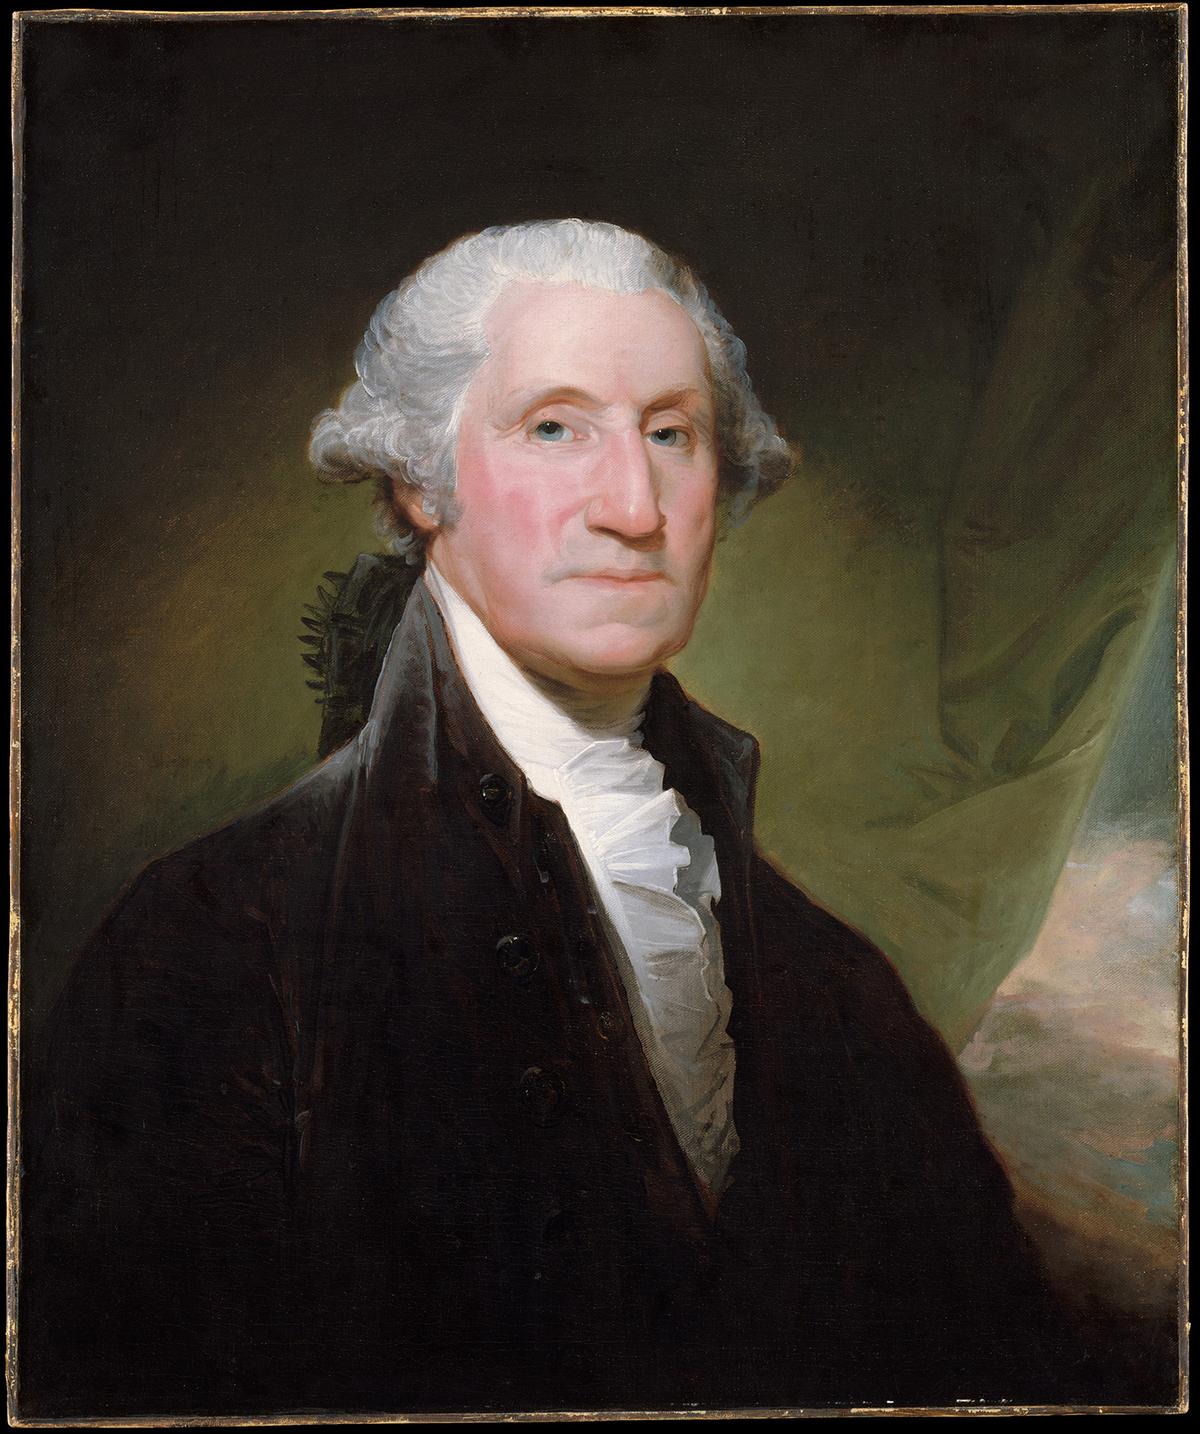 "Portrait of George Washington," 1795, by Gilbert Stuart. Oil on canvas. Metropolitan Museum of Art, New York. (Public Domain)